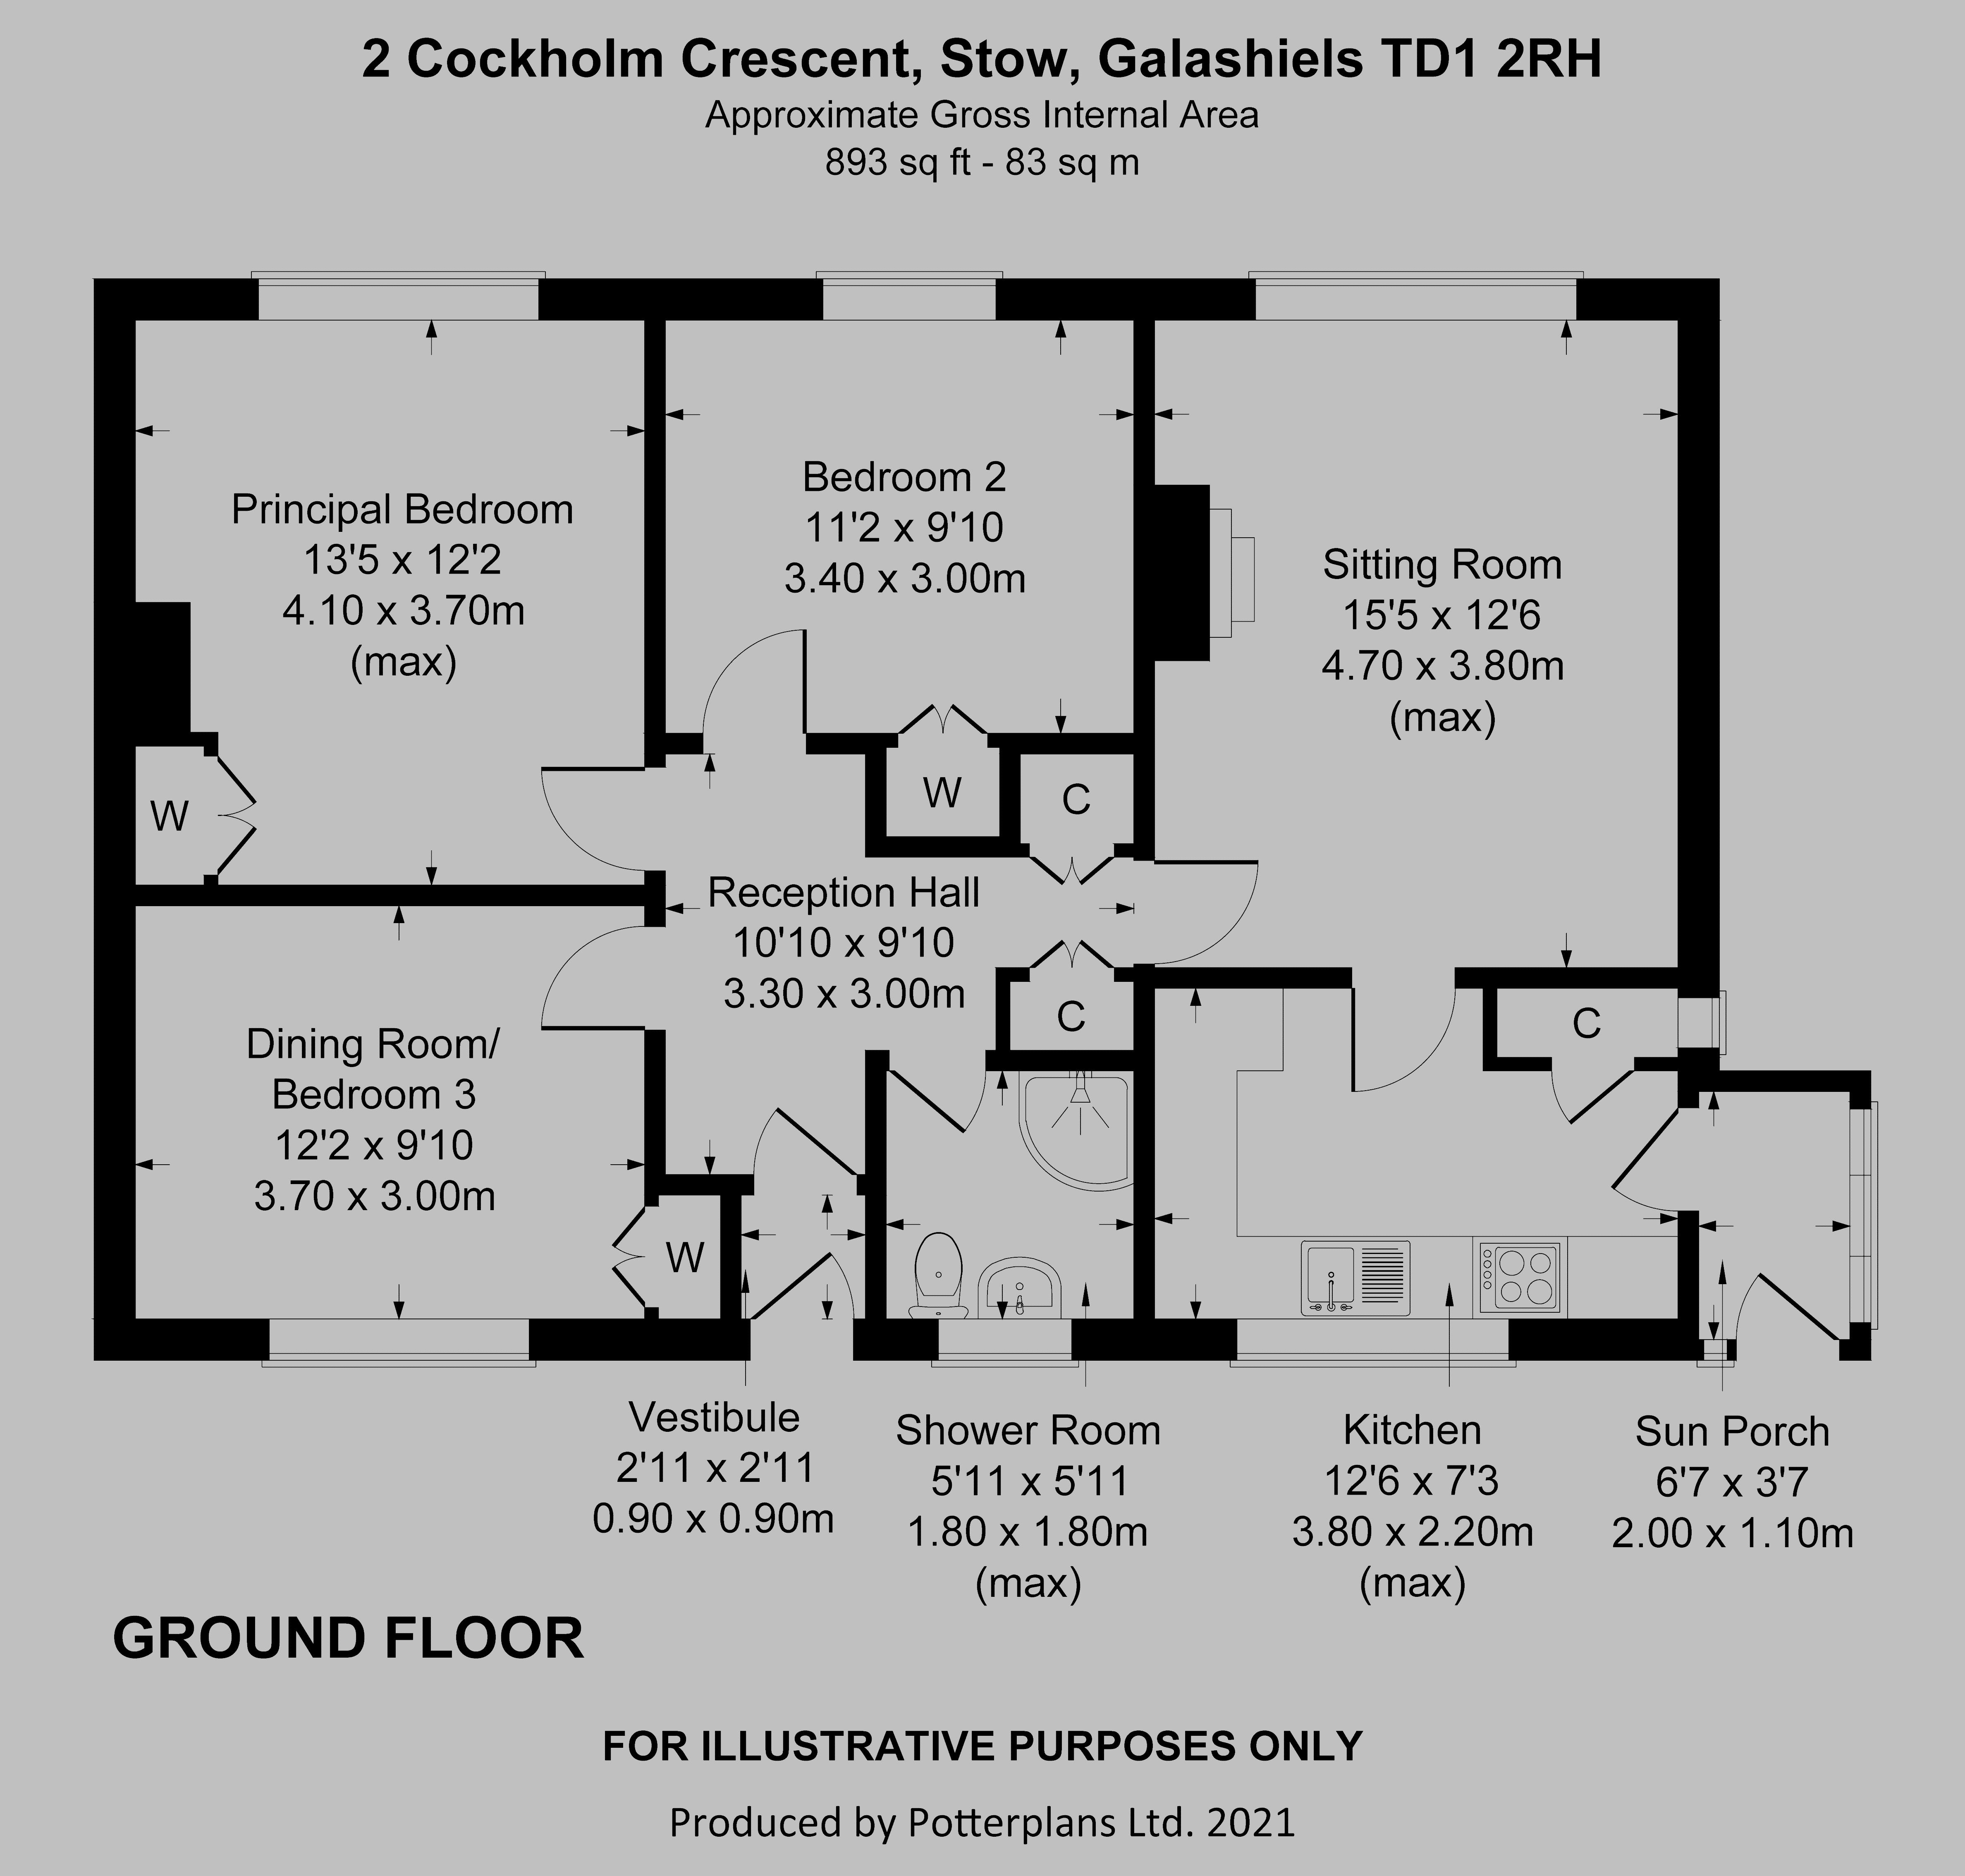 2 Cockholm Crescent Ground Floor